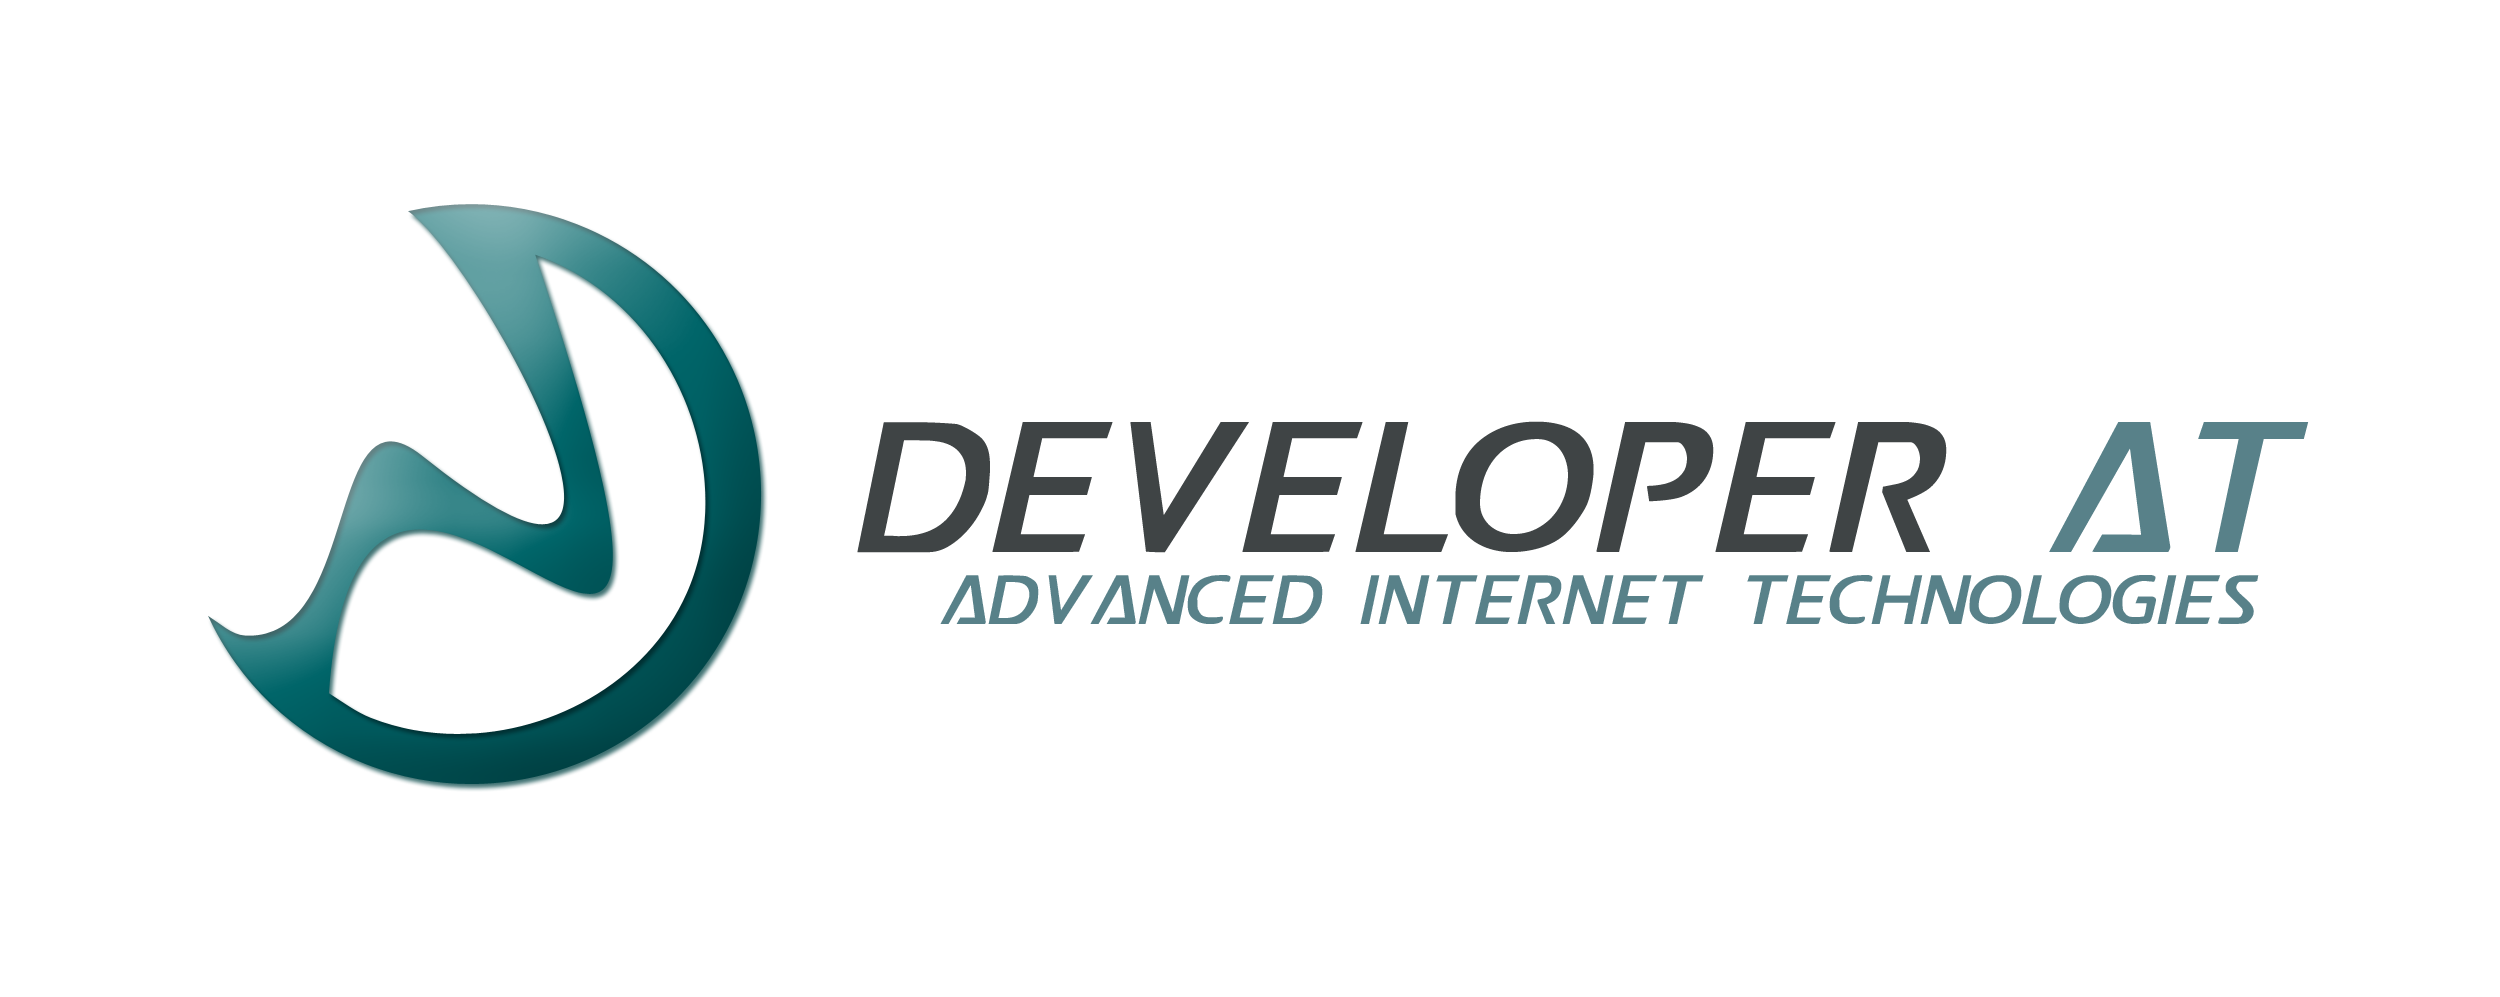 developer-at-logo